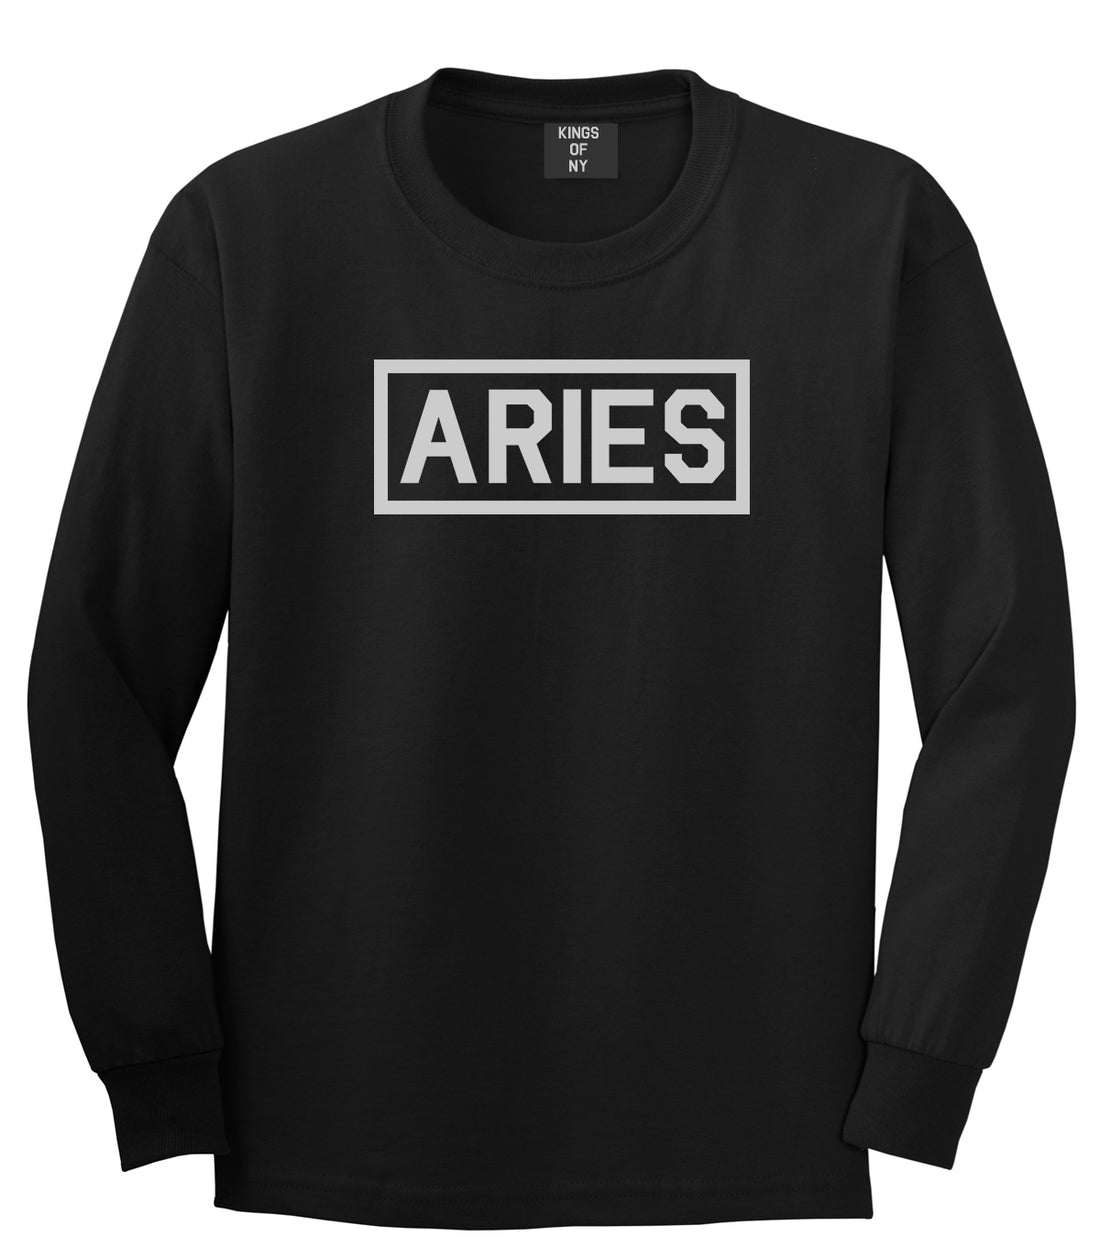 Aries Horoscope Sign Mens Black Long Sleeve T-Shirt by KINGS OF NY